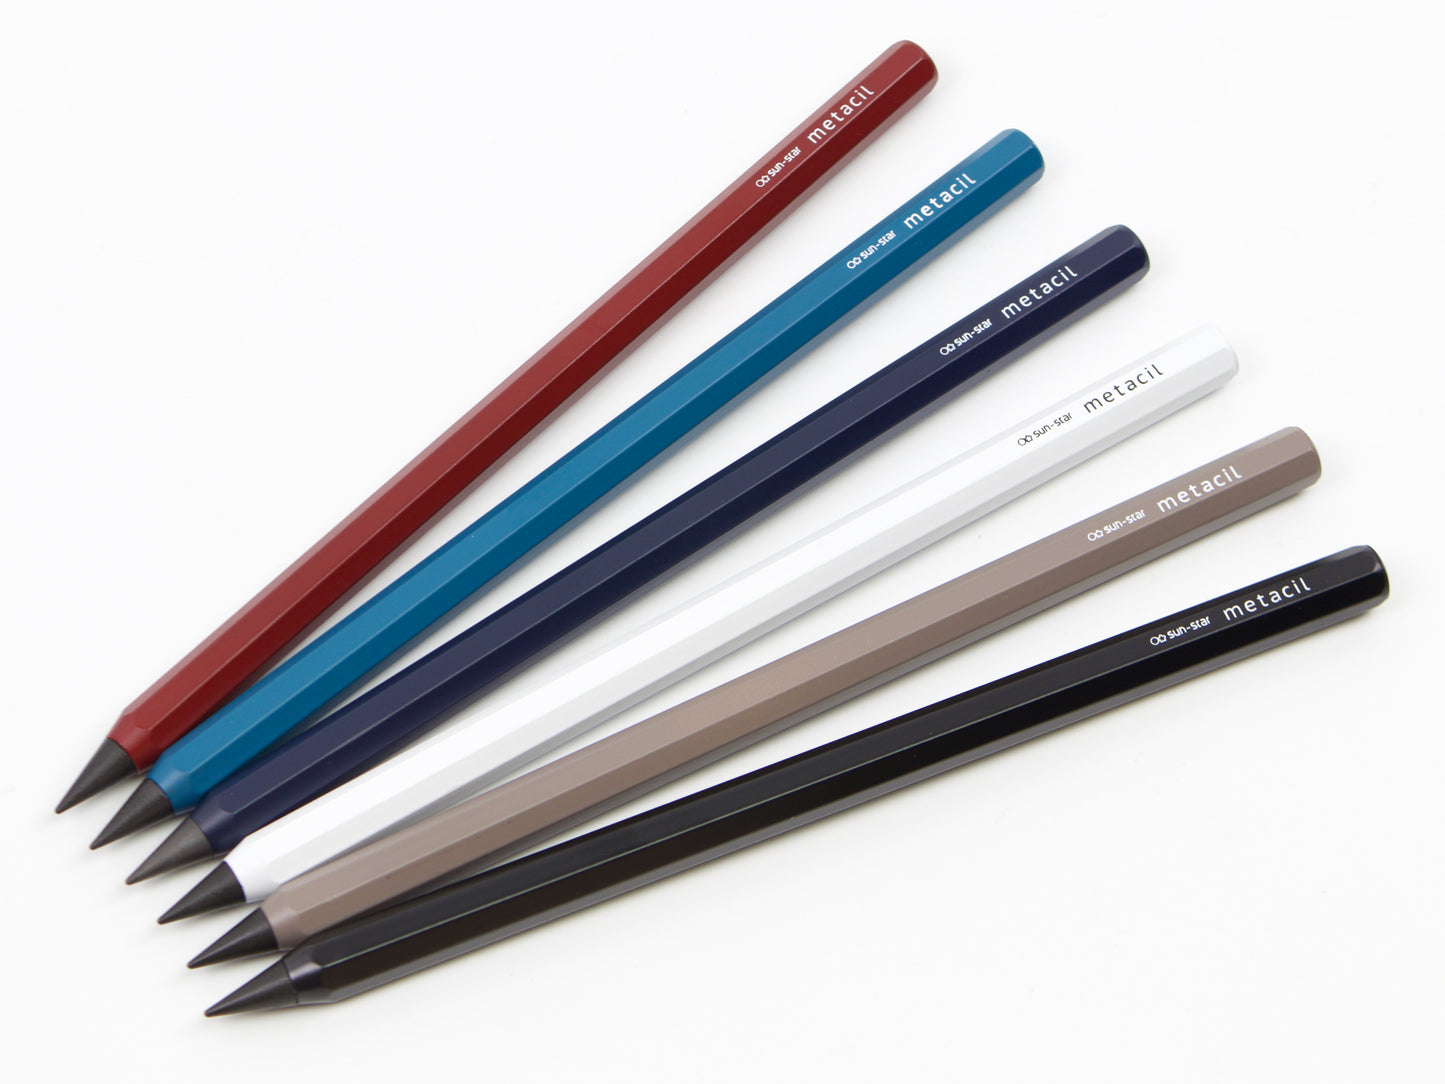 metacil pocket Metal Pencil - Beige – Techo Treats